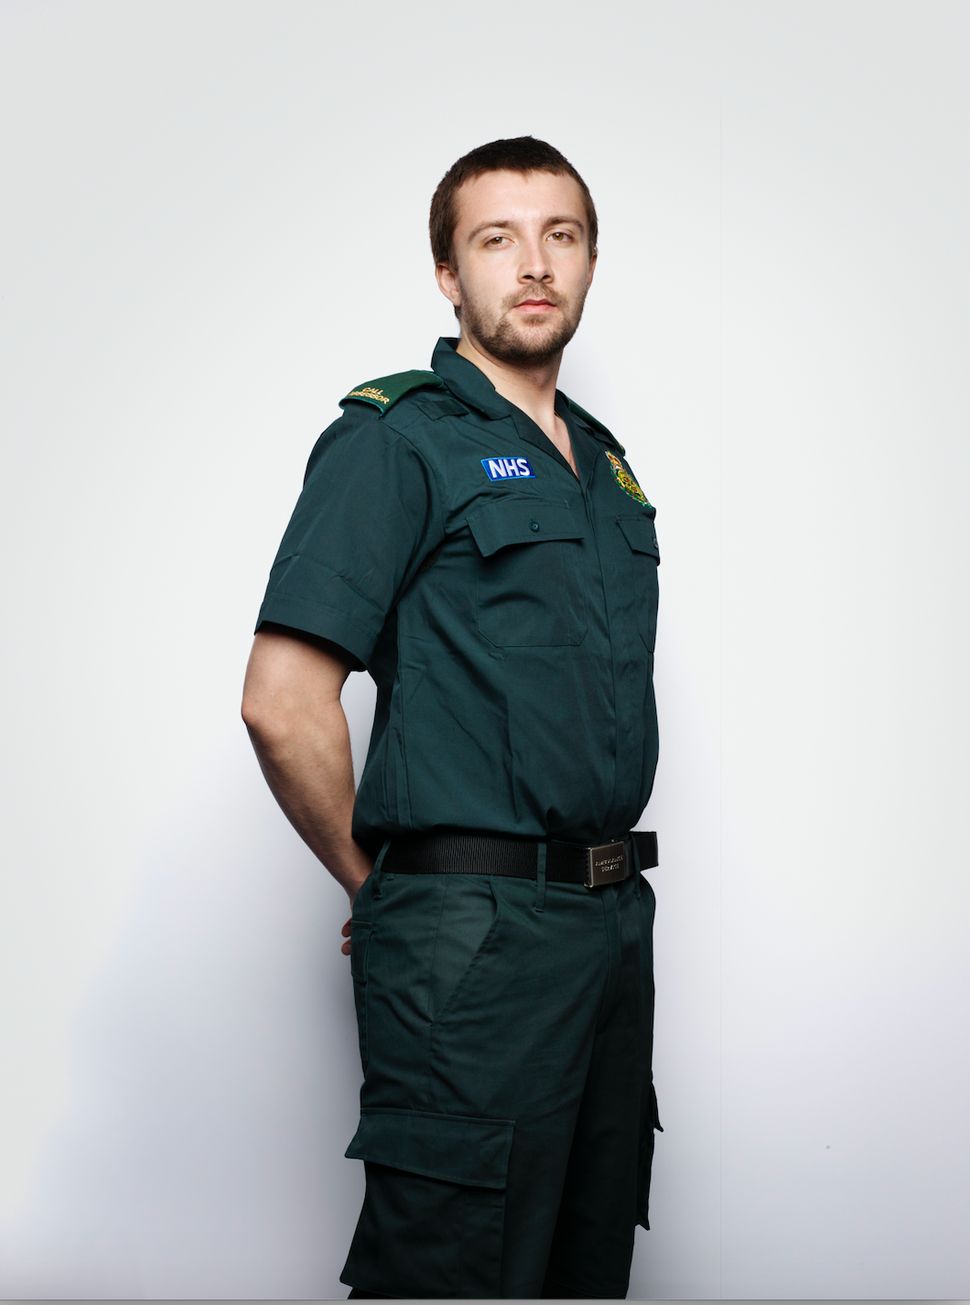 Jack Hannay Manikum, 111 call handler, West Midlands Ambulance Service